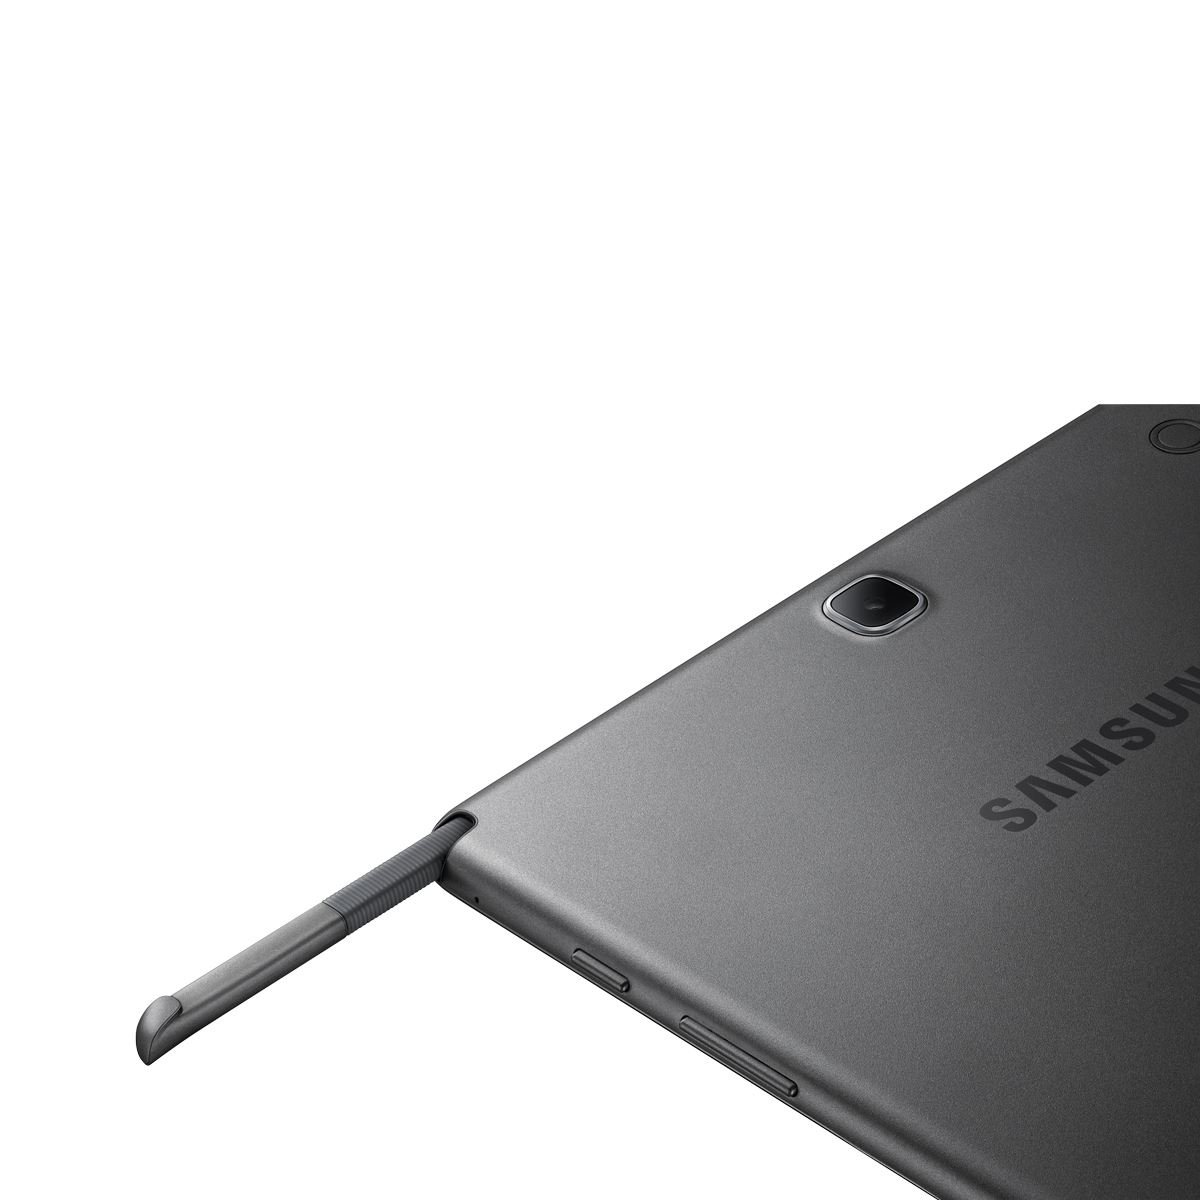 Galaxy Tab A 9.7" Gris con S Pen 2gb Sm-P550nzaamxo